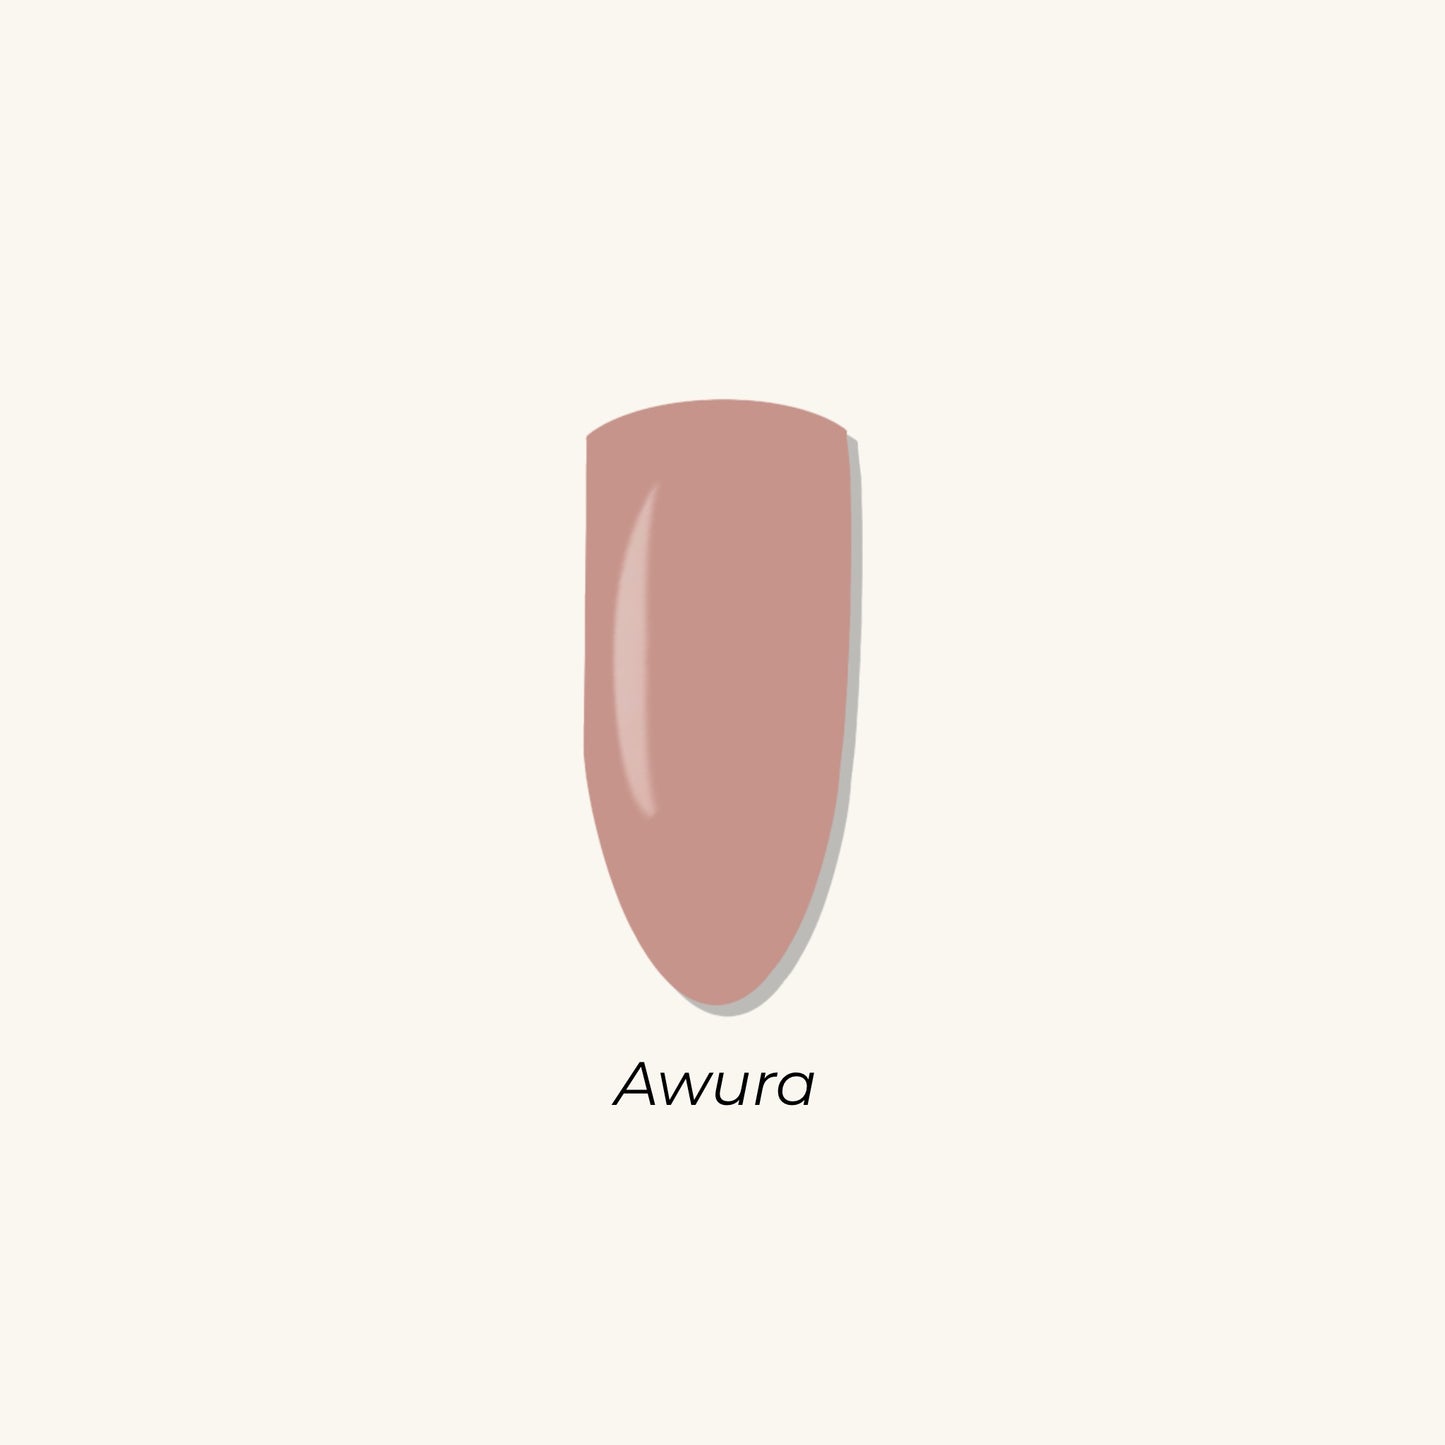 Awura